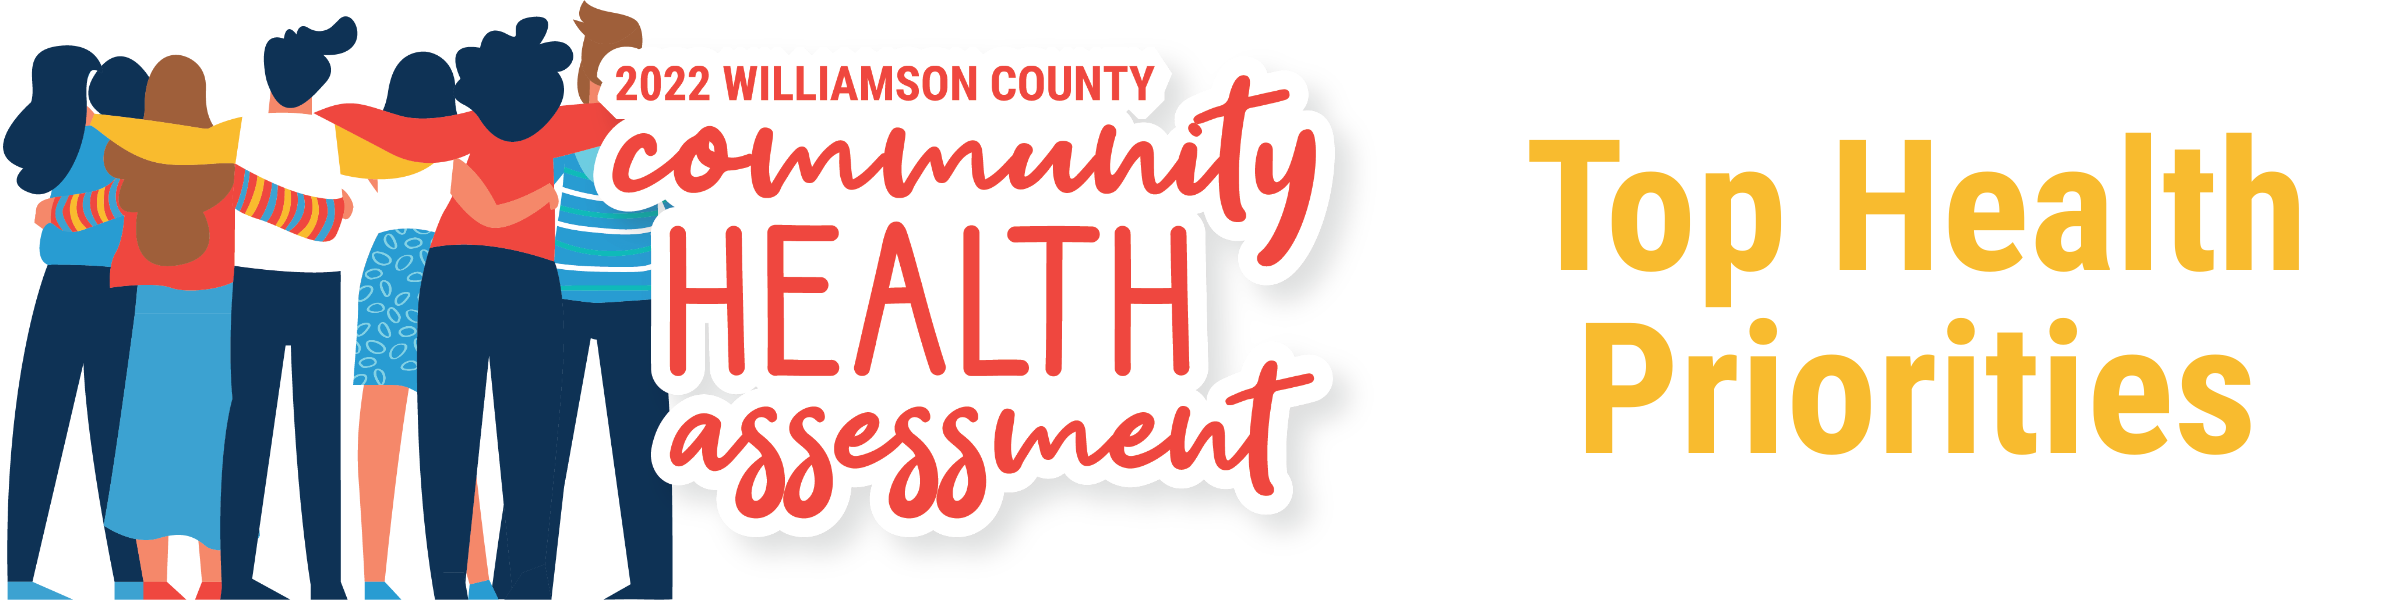 2022 Williamson County Community Health Assessment Top Health Priorities